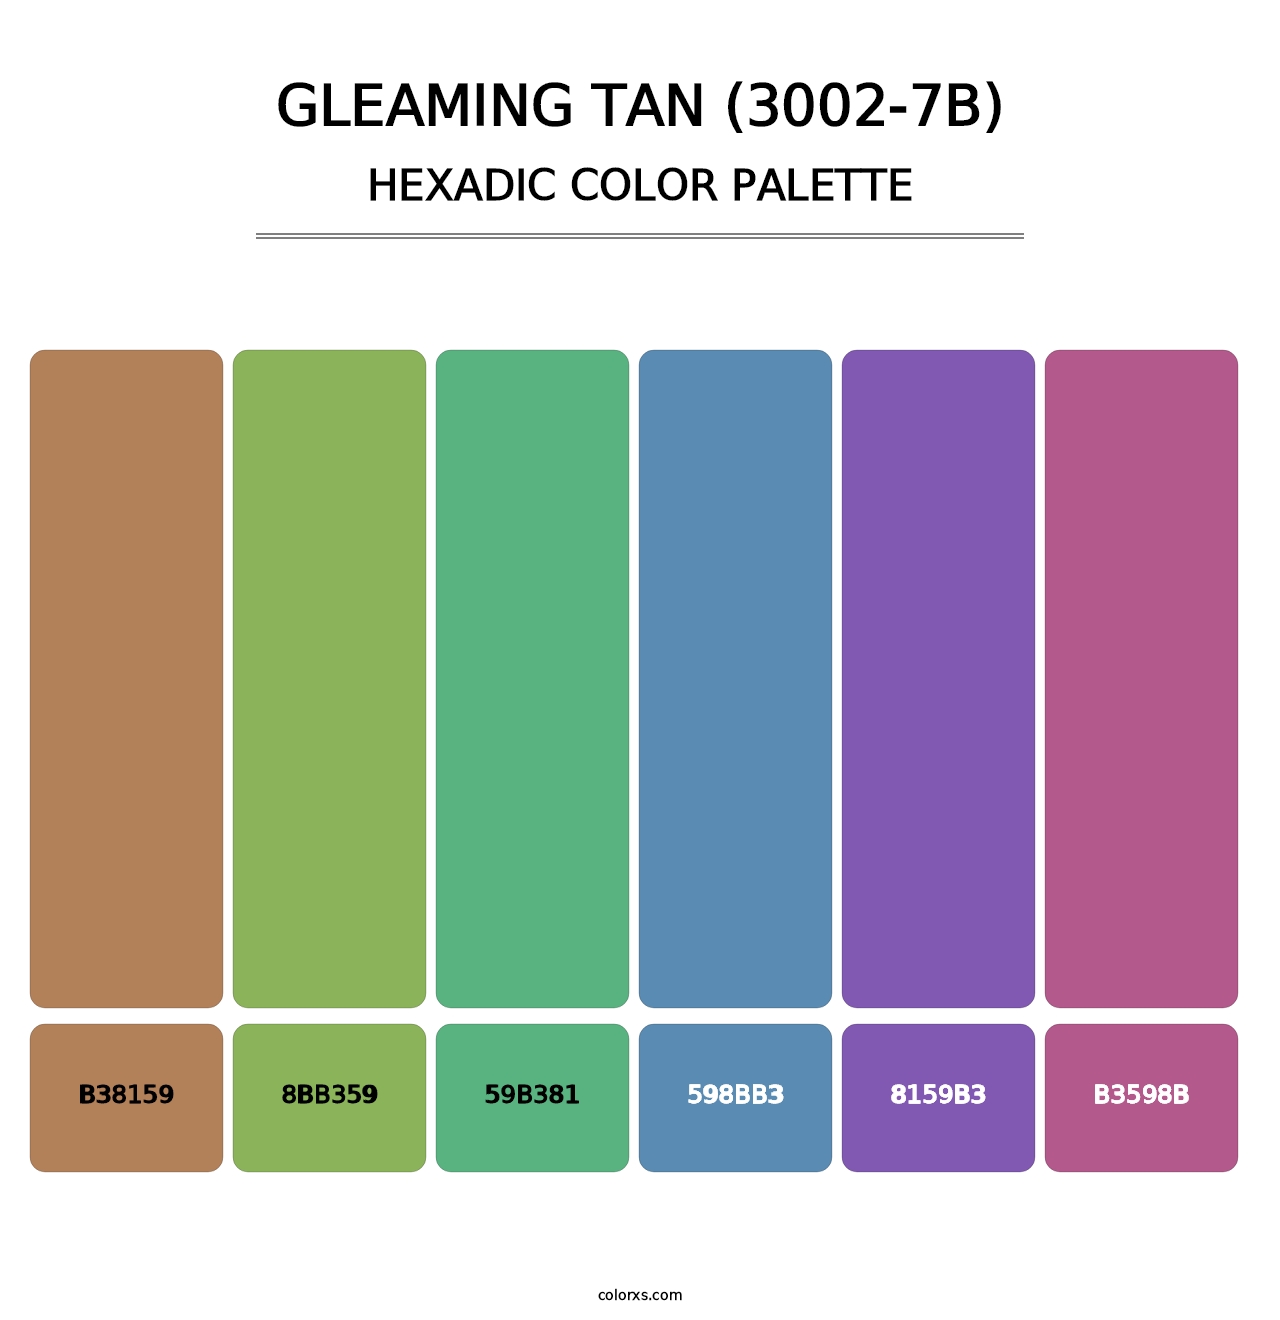 Gleaming Tan (3002-7B) - Hexadic Color Palette